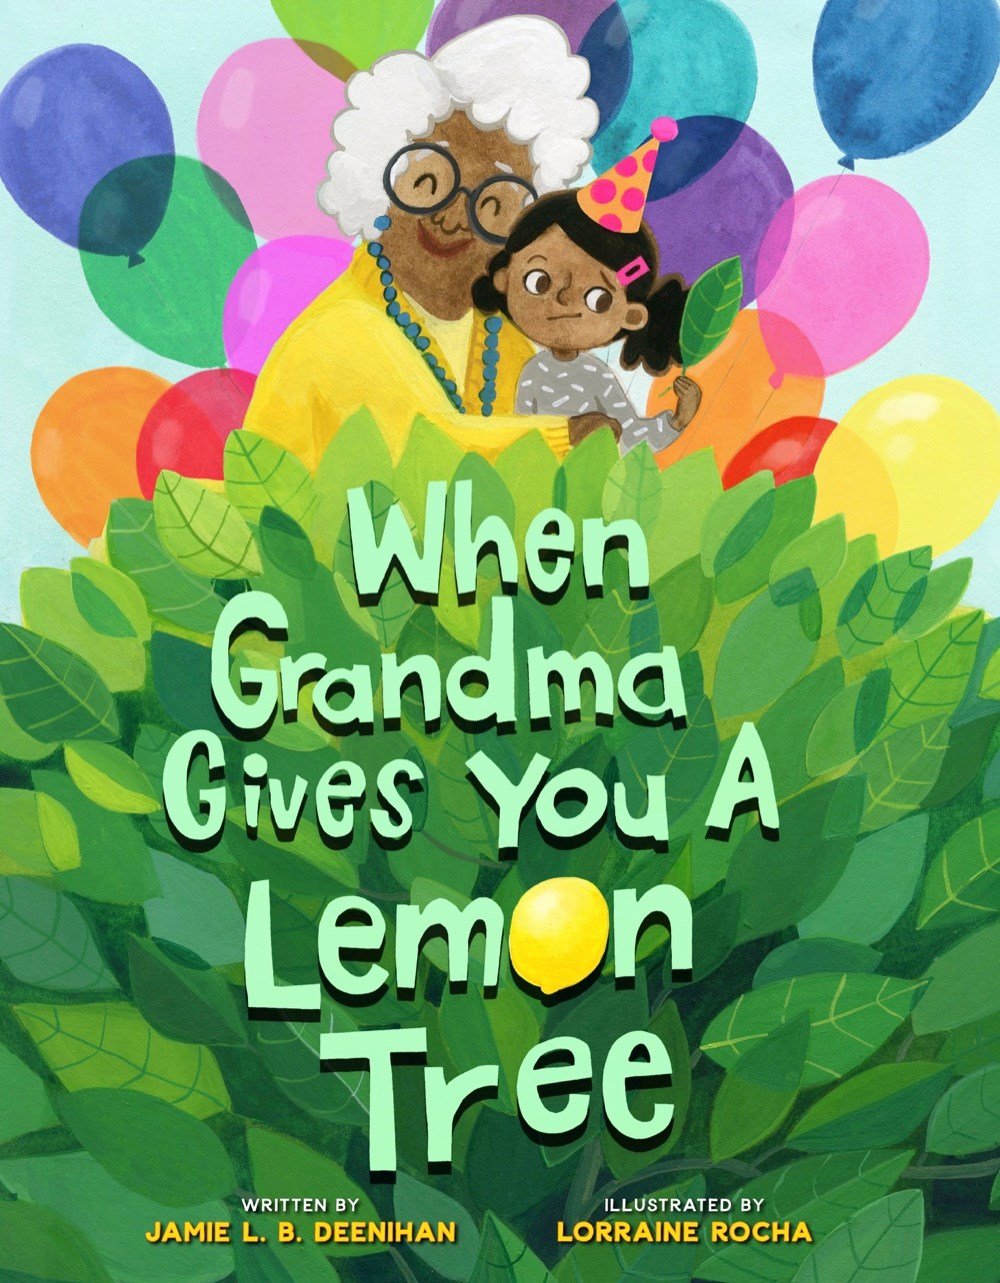 https://images.squarespace-cdn.com/content/v1/5aff8a237e3c3abd03568195/72cd362d-fbcf-4075-8758-efaa2f12ebb1/When-Grandma-Gives-You-a-Lemon-Tree.jpg